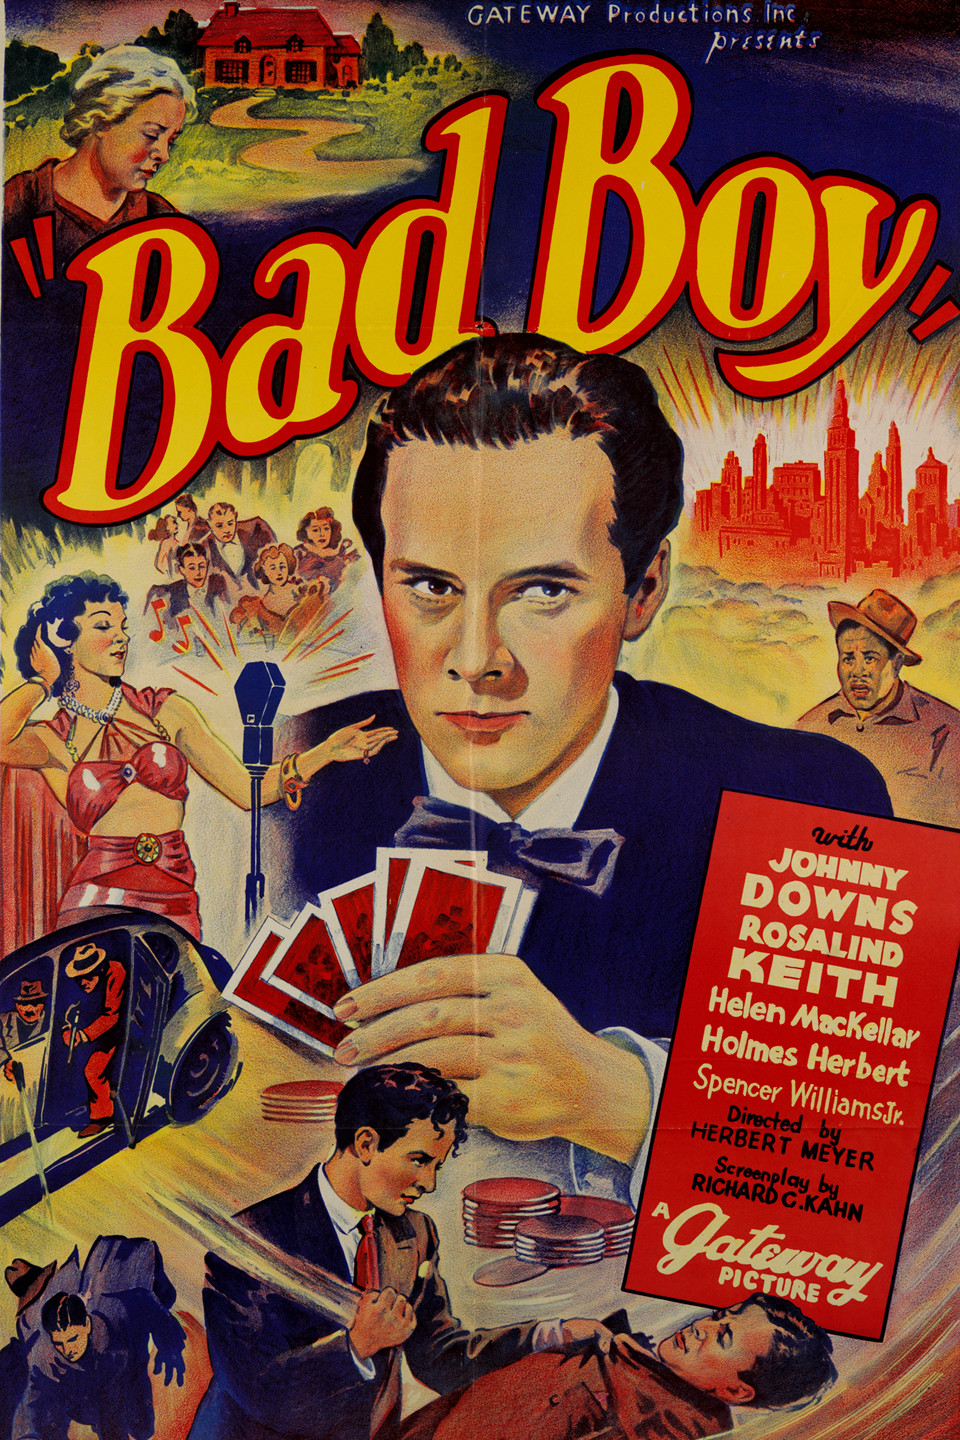 Bad Boy (Johnny Downs) movie poster